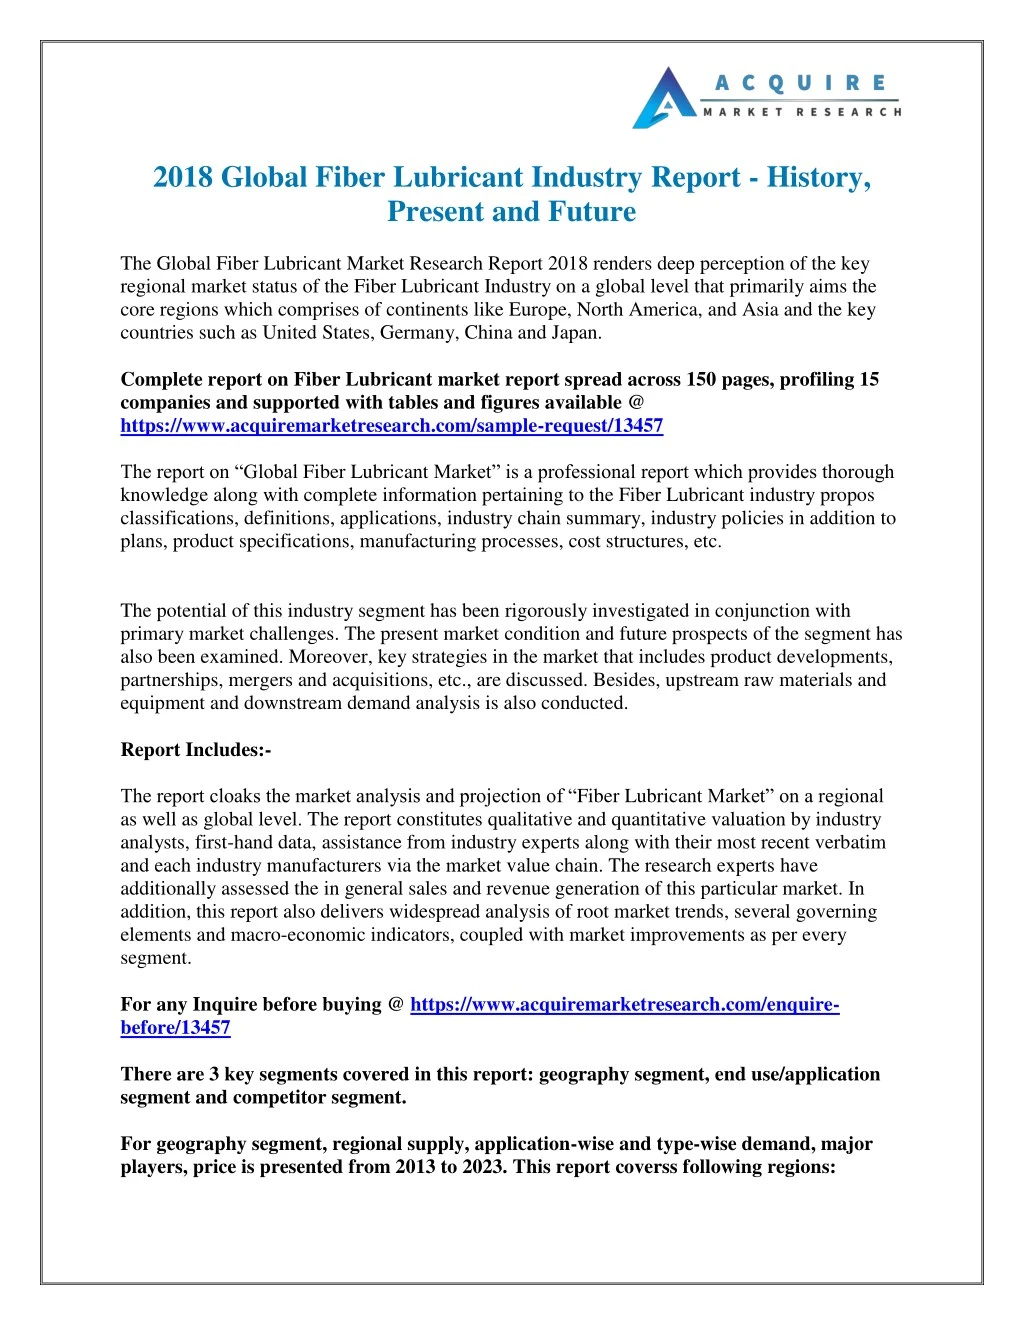 2018 global fiber lubricant industry report